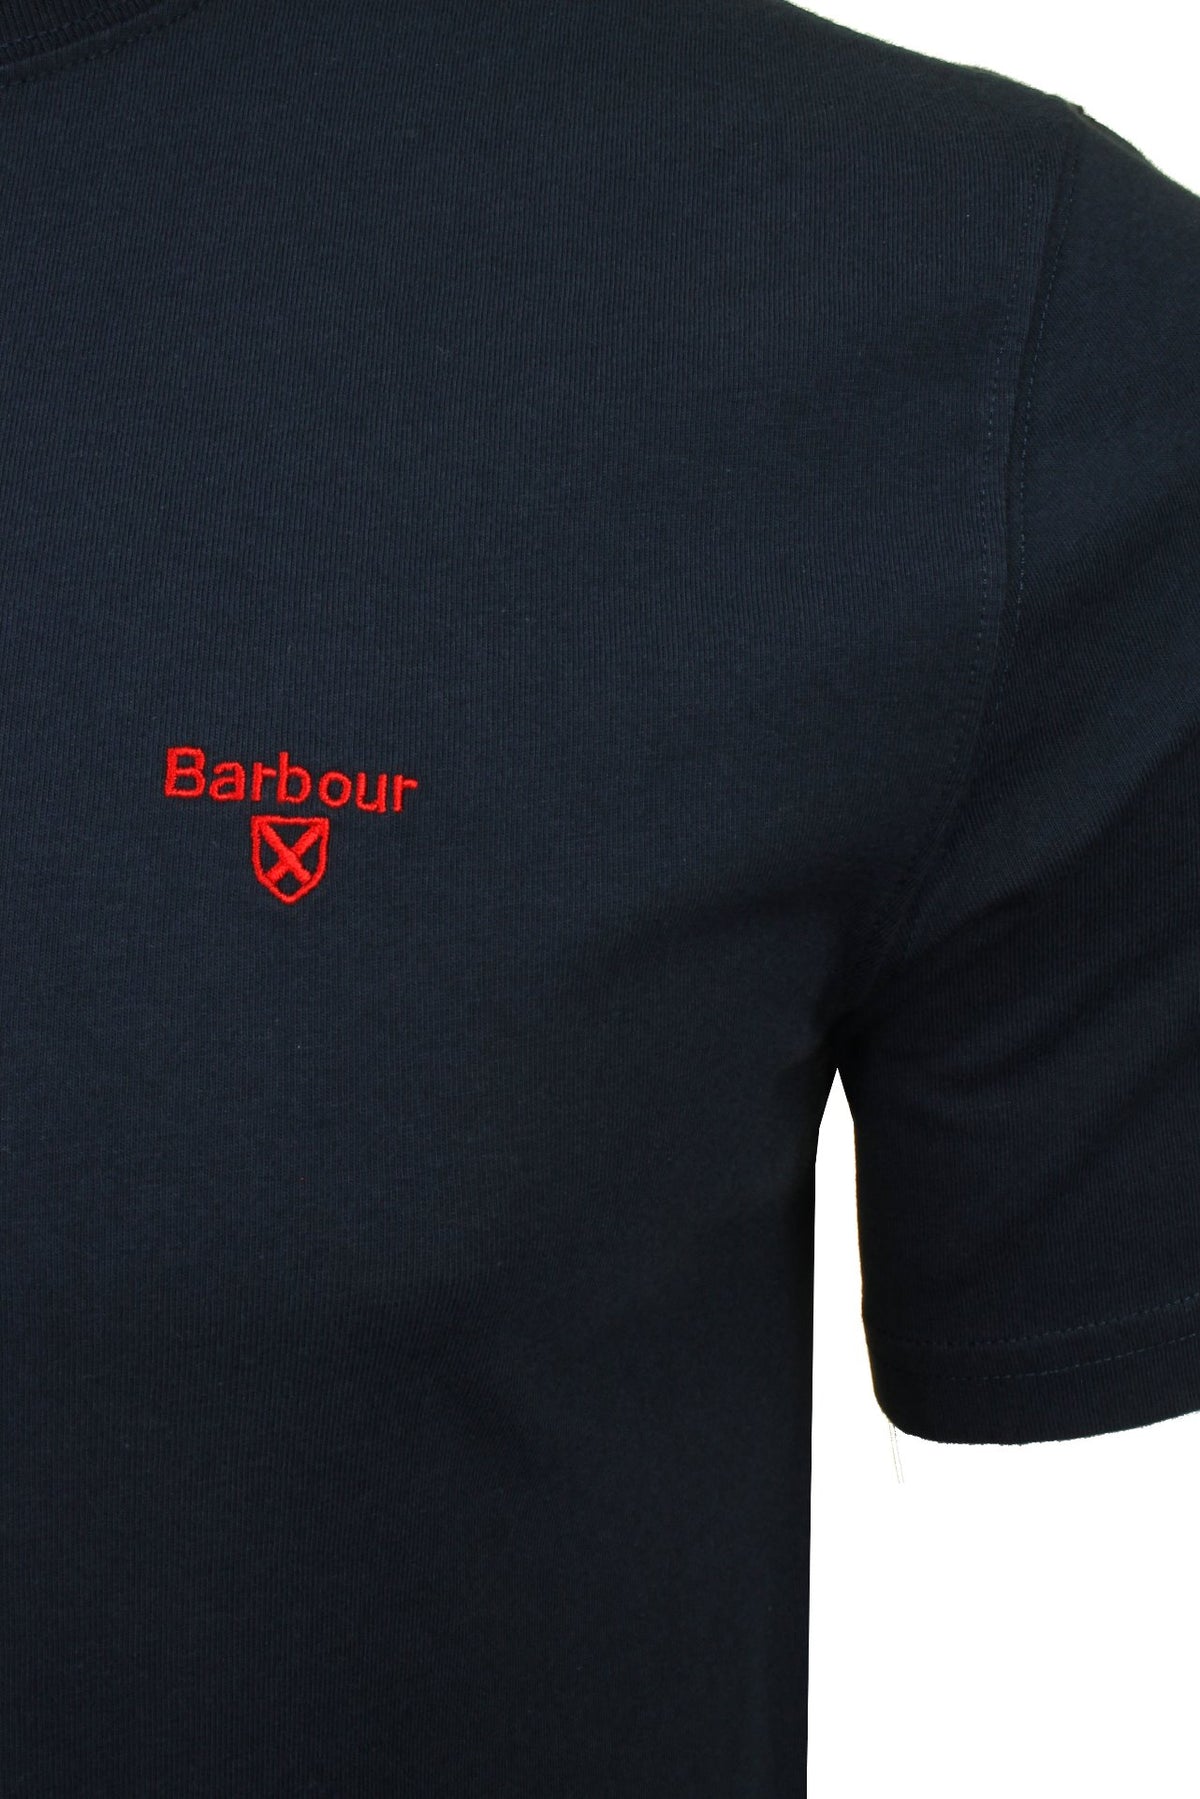 Barbour Men's Sports T-Shirt - Short Sleeved, 02, Mts0331, Navy